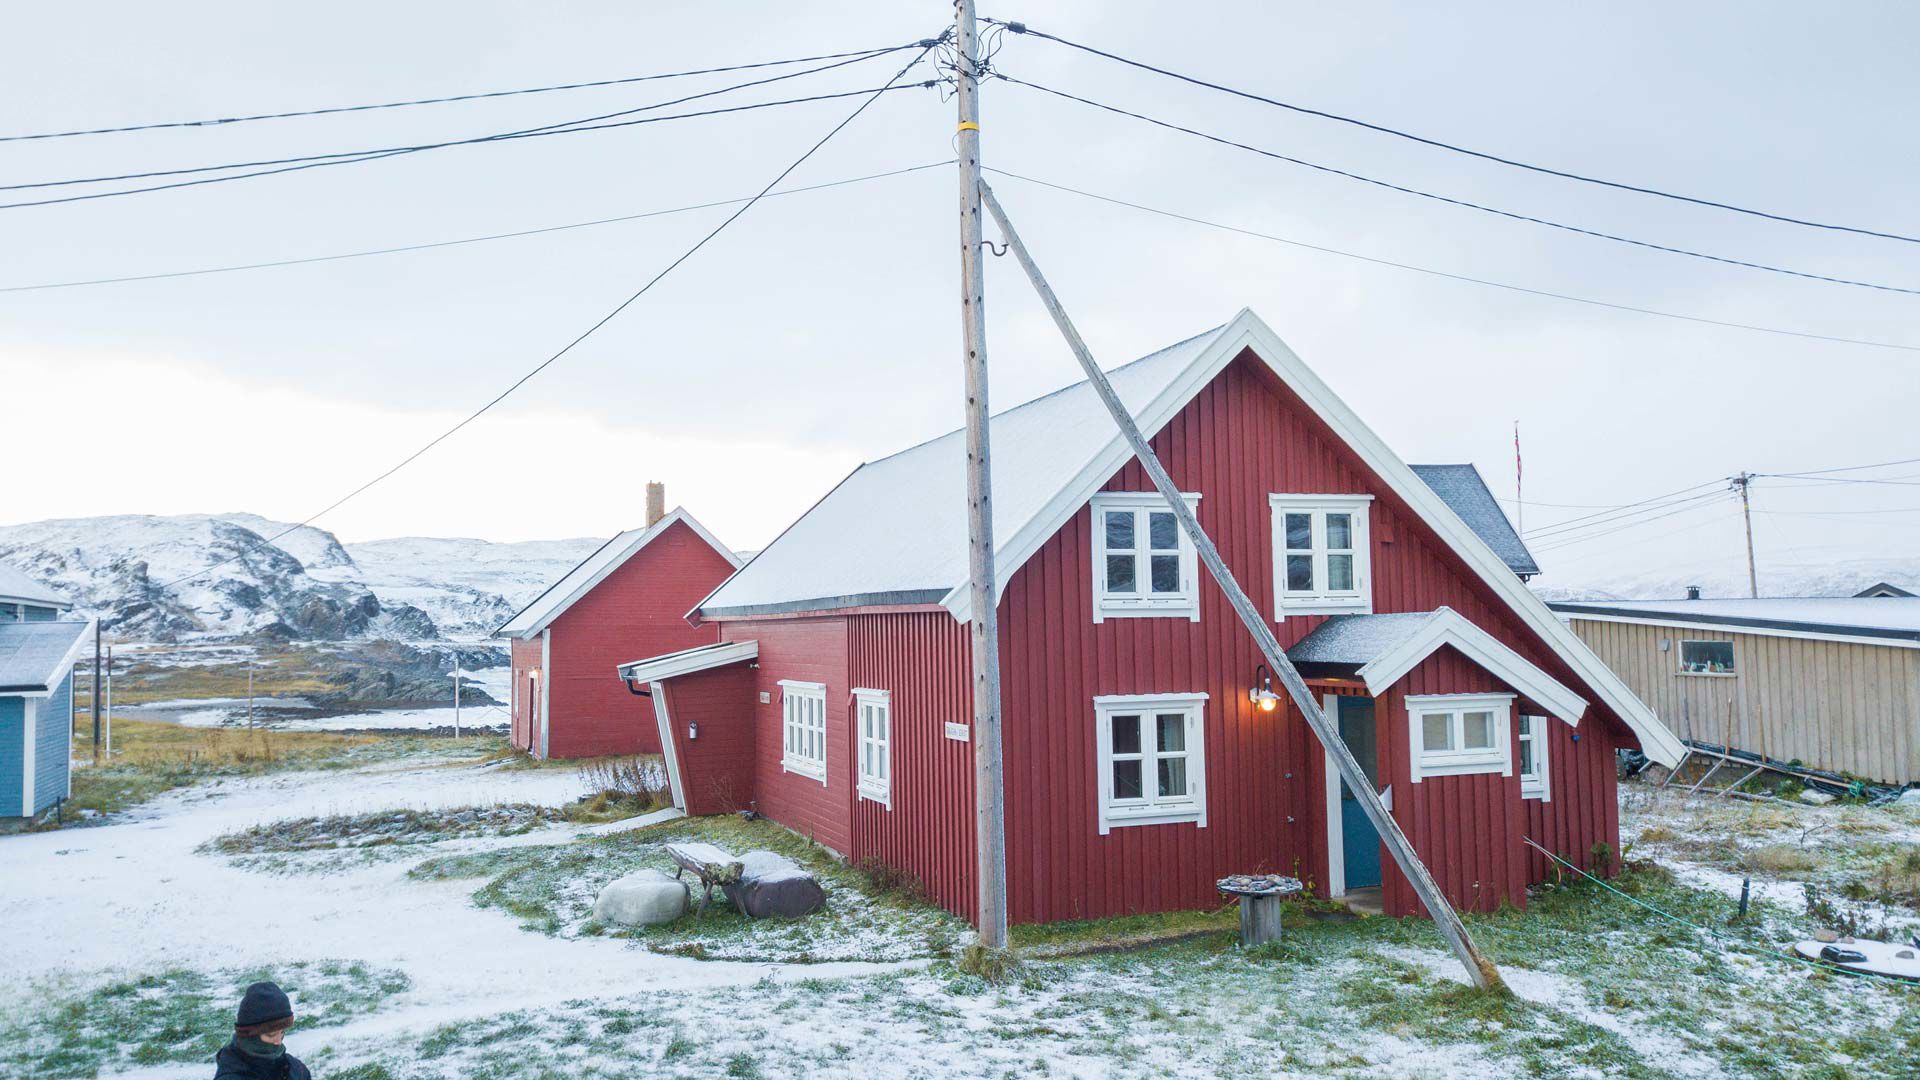 Kongsfjord Artic Lodge - Rooms 4